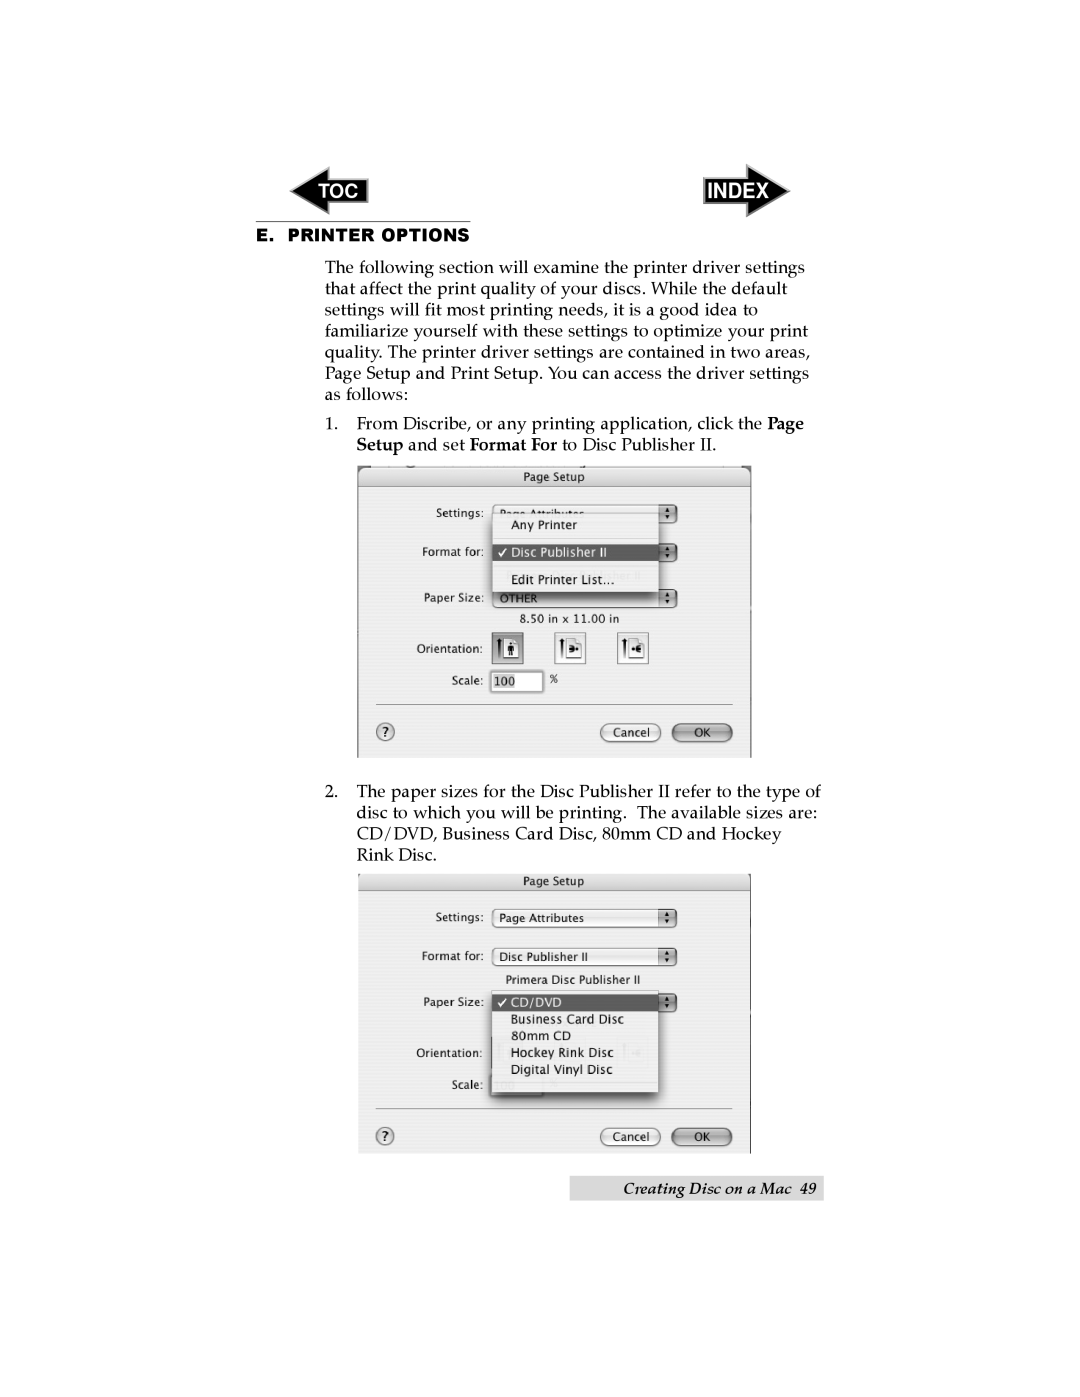 Primera Technology II user manual Index, E. Printer Options 